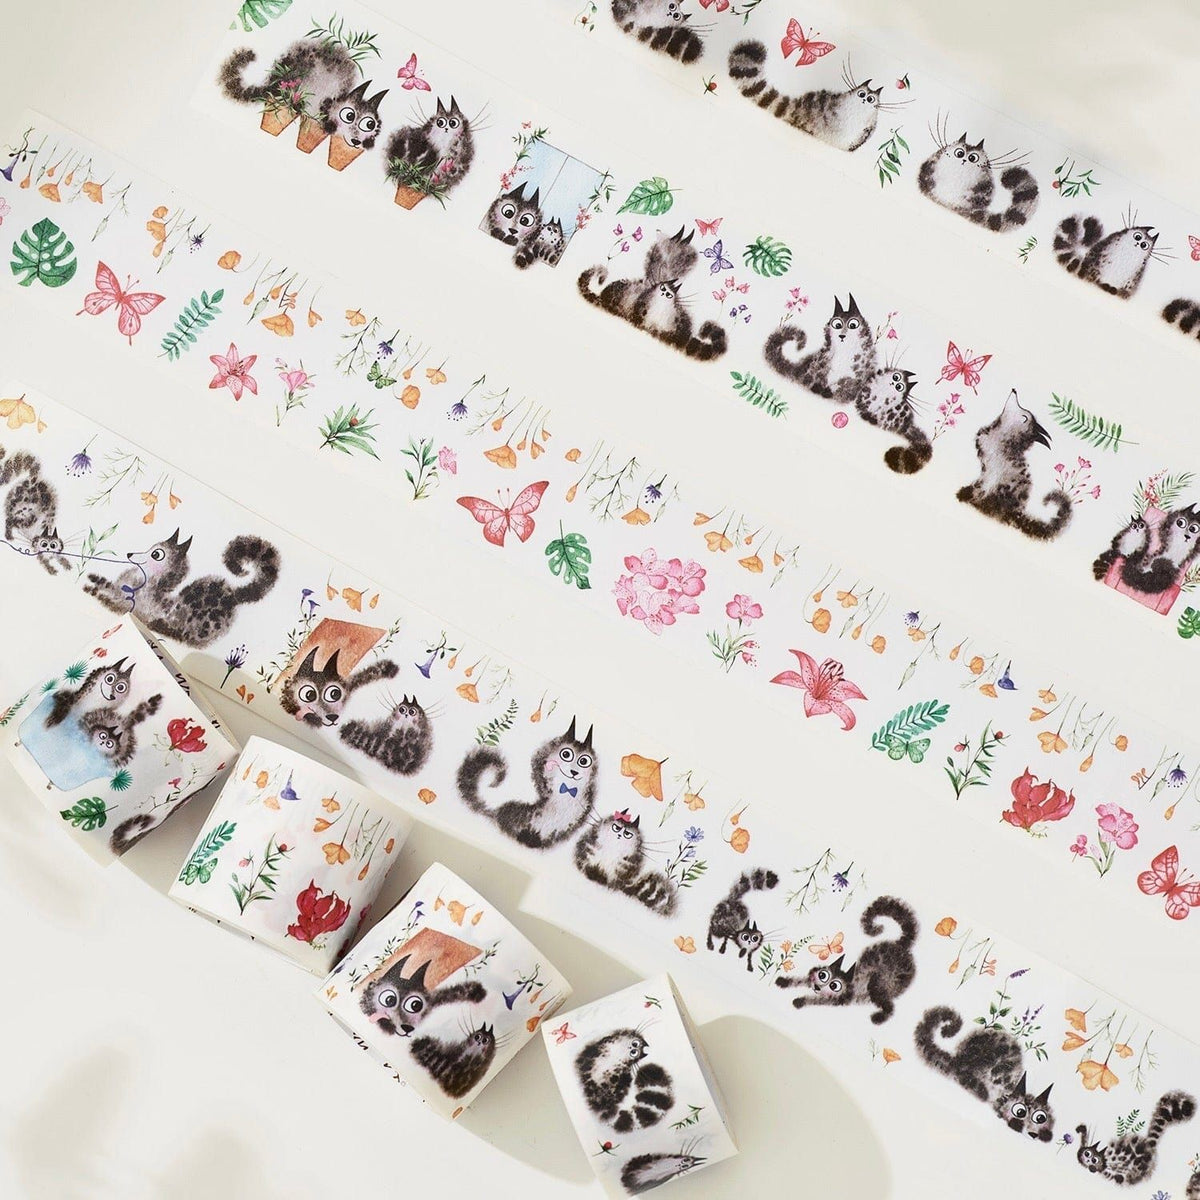 The Washi Tape Shop Fuzzy Friendship Washi Tape Sticker Set by The Washi Tape Shop